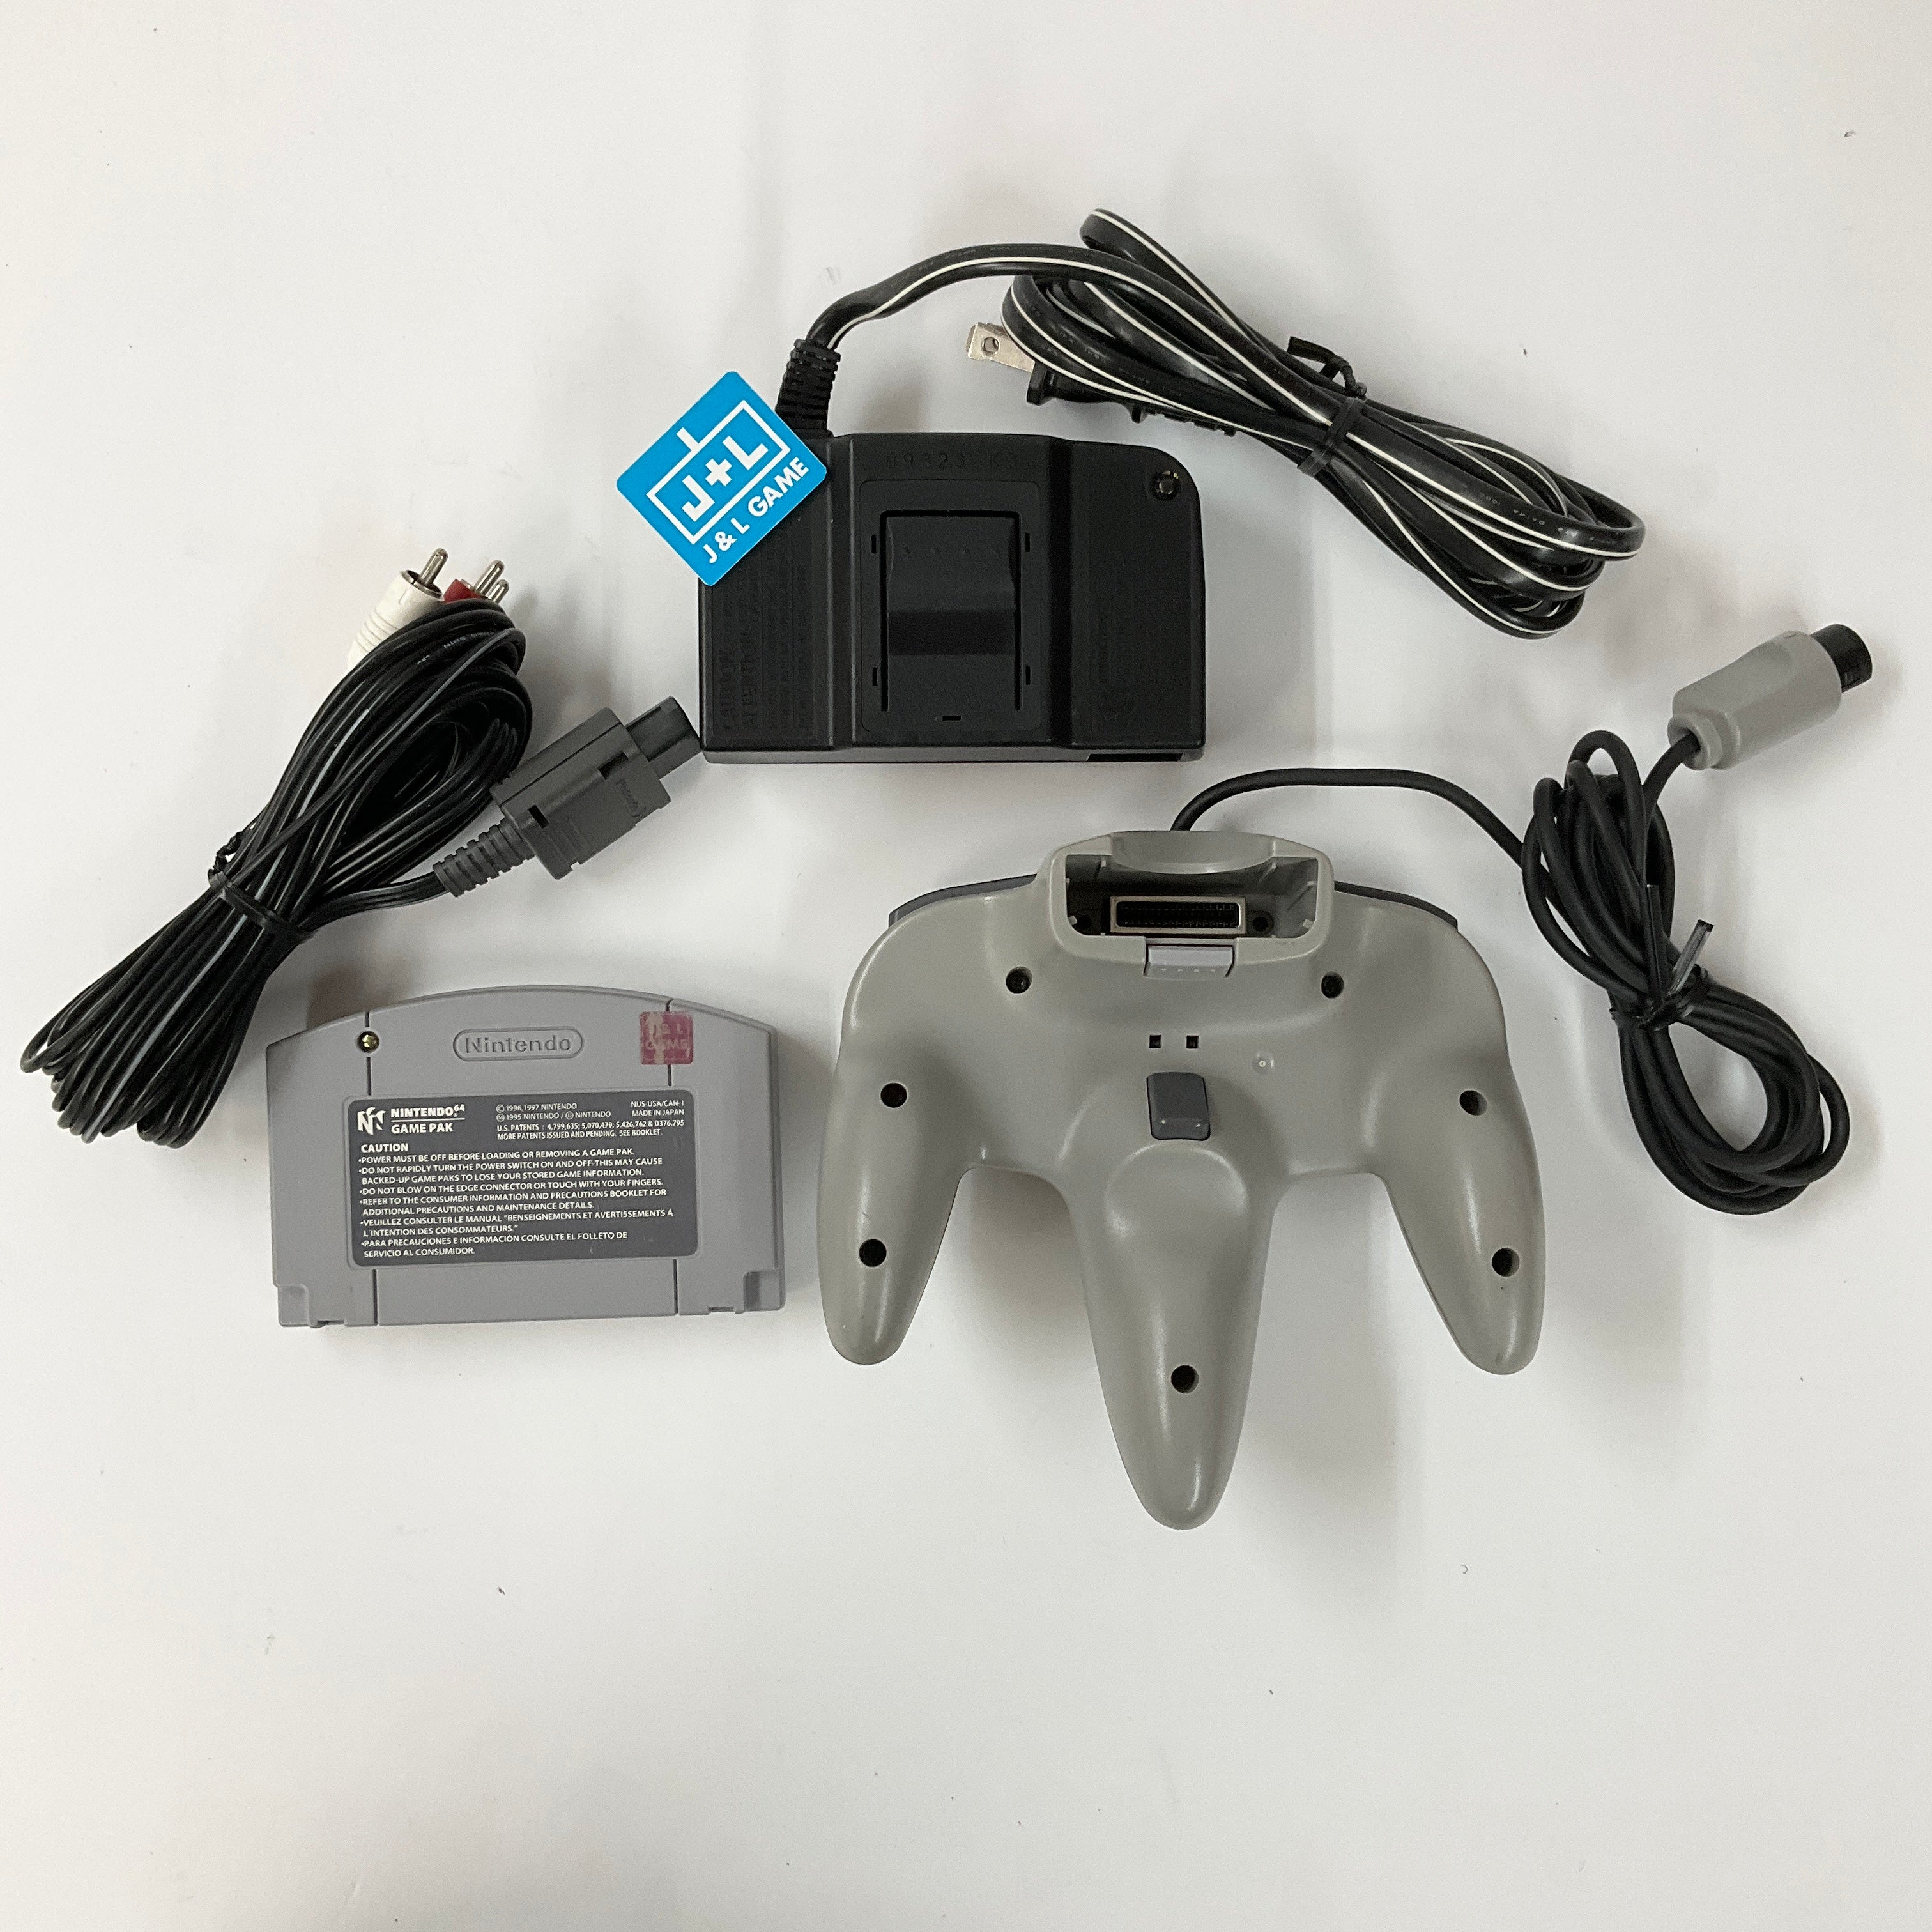 Nintendo 64 Hardware Console (Star Wars) - (N64) Nintendo 64 [Pre-Owned] CONSOLE Nintendo   